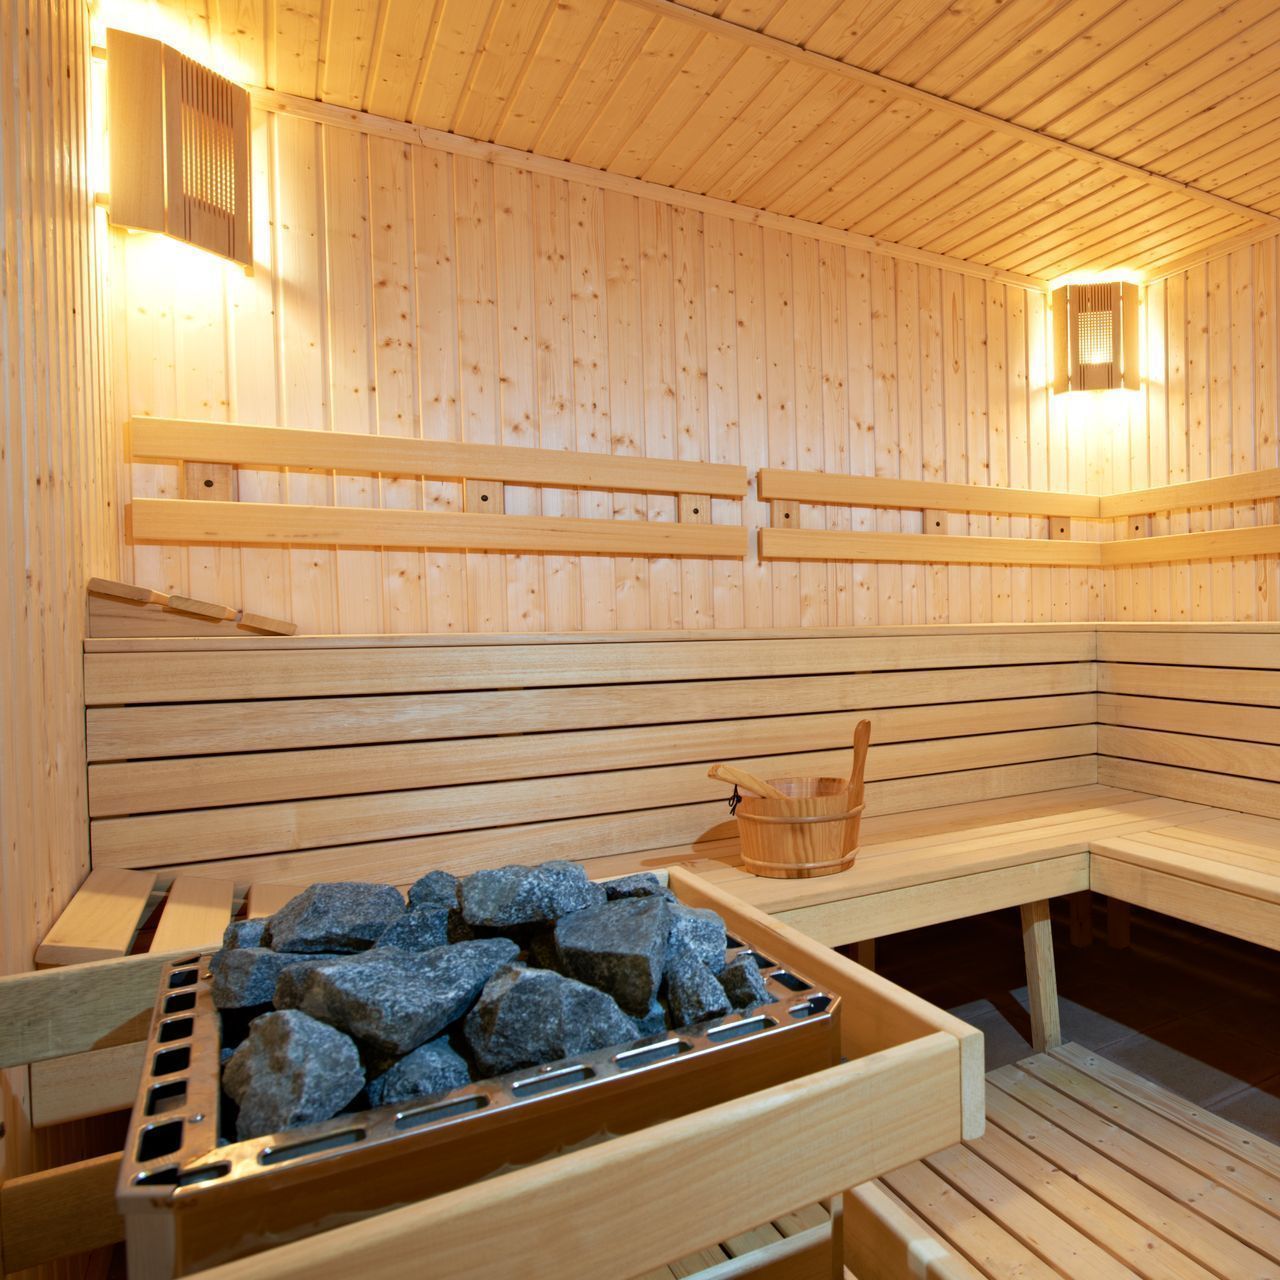 SAWO Sauna room with rocks